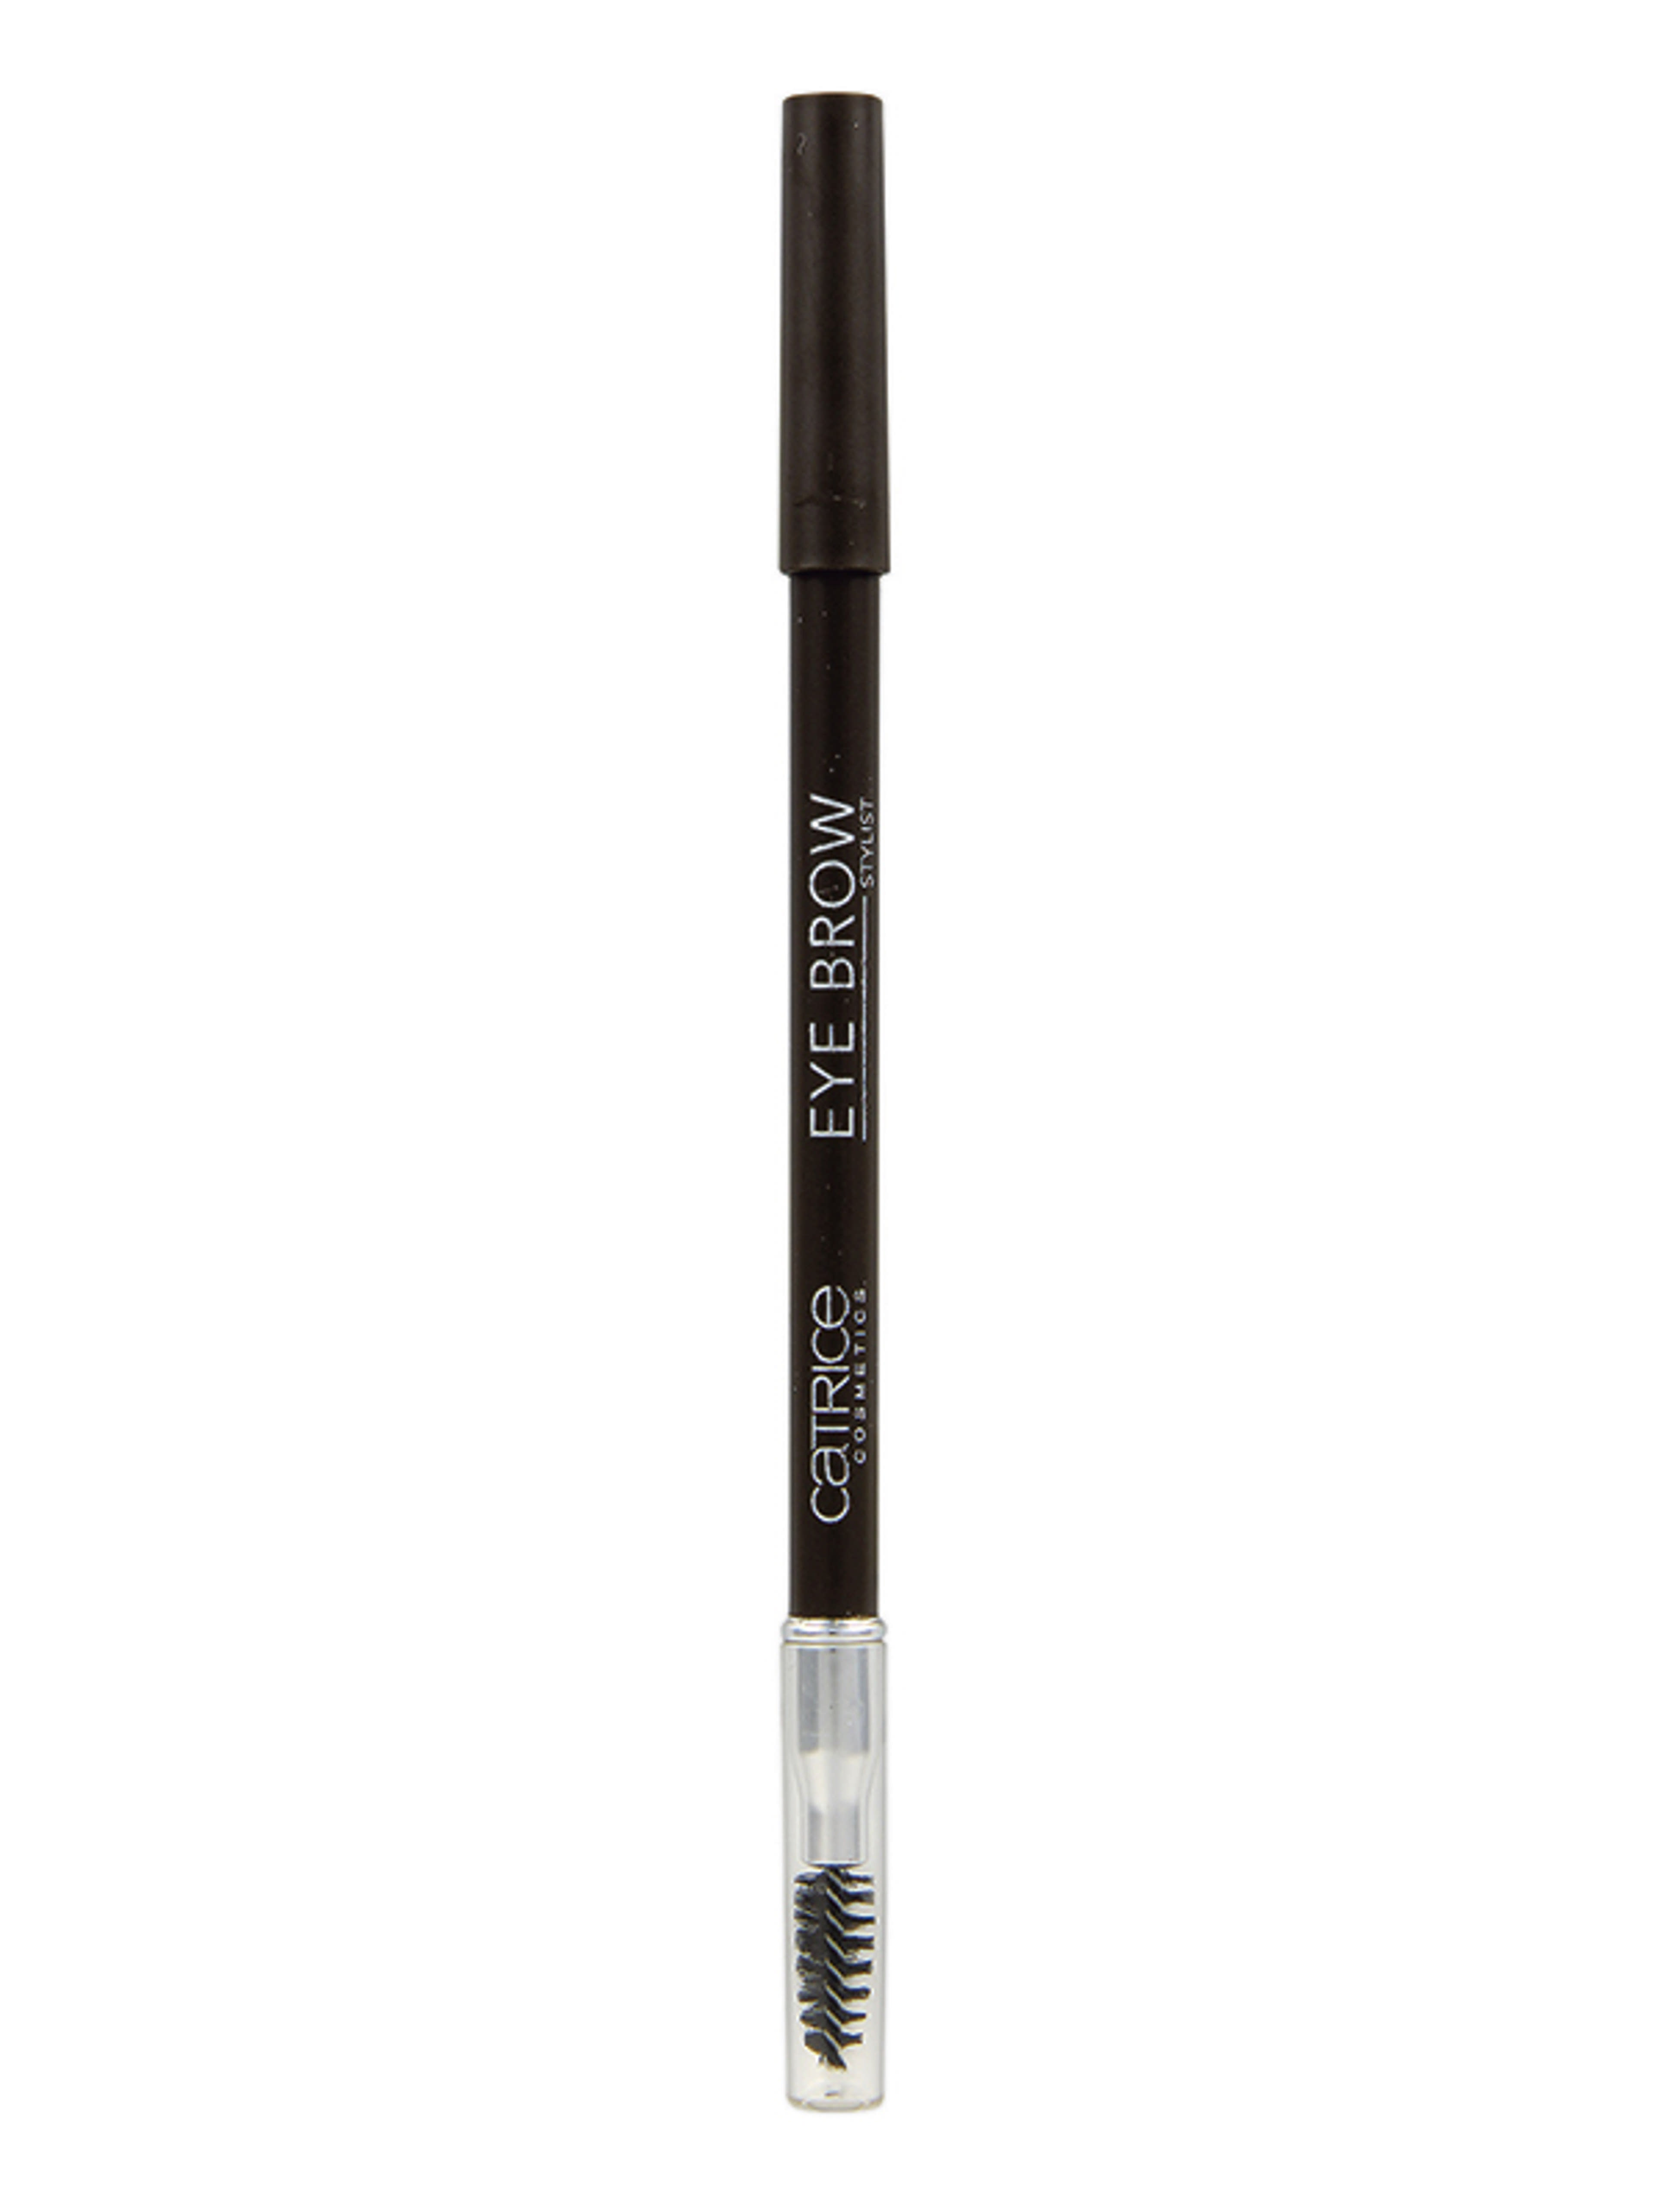 Catrice Szemöldök ceruza, brow-n-eyed peas 030 - 1,6 g